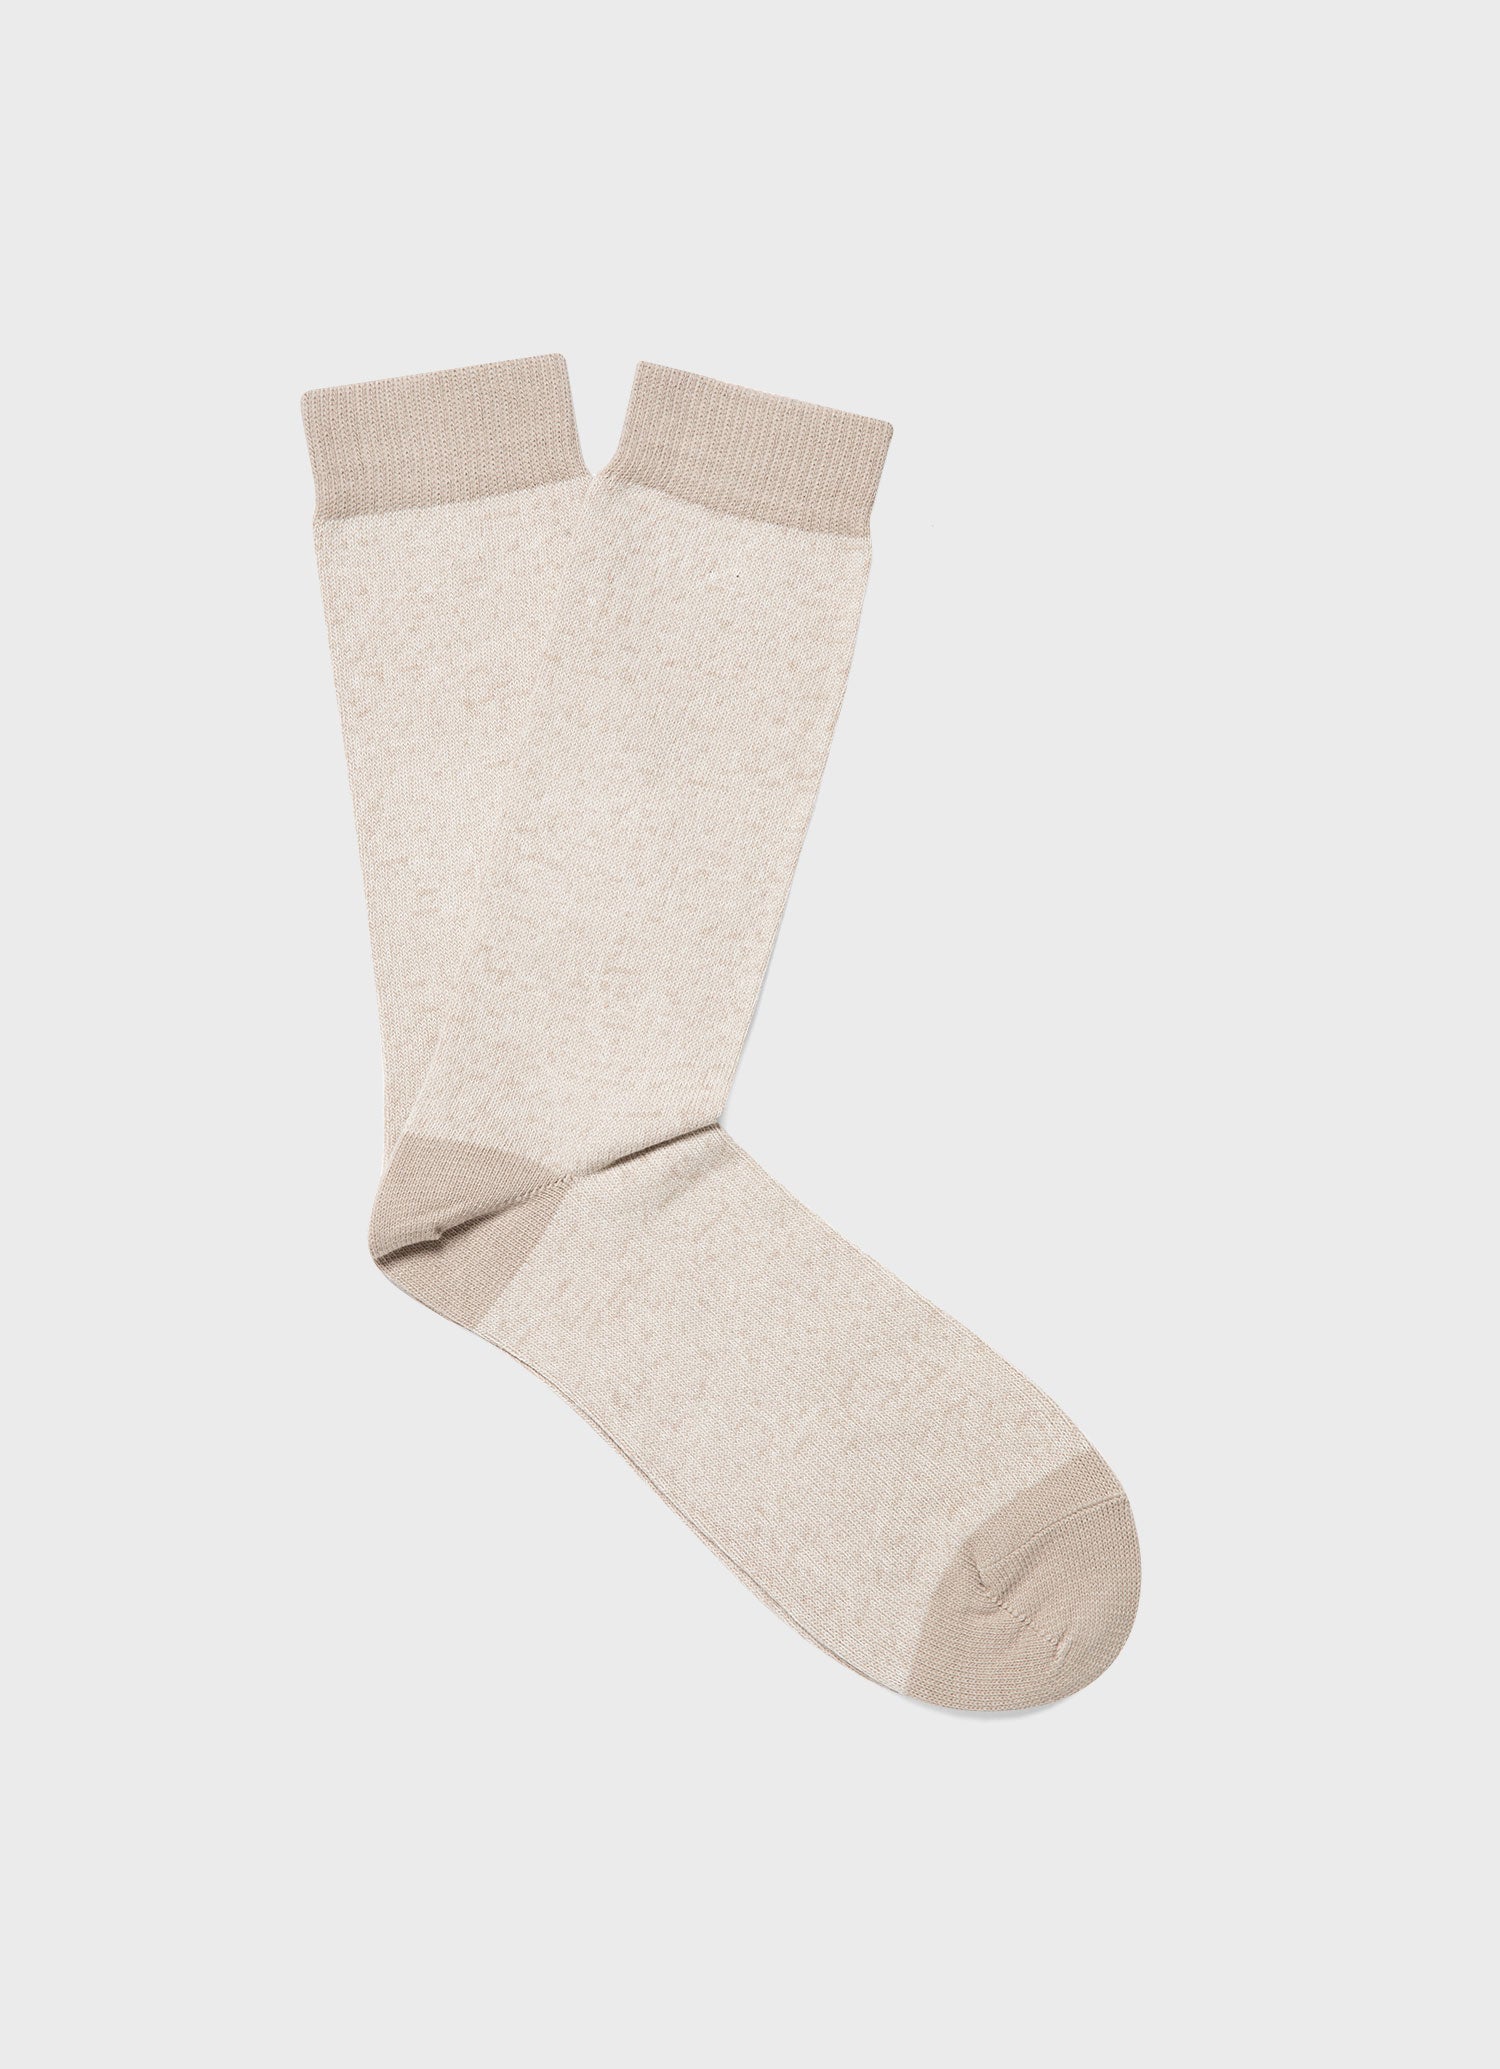 Bounty Terzijde Onzorgvuldigheid Men's Cotton Sock in Light Sand/Ecru Twist | Sunspel